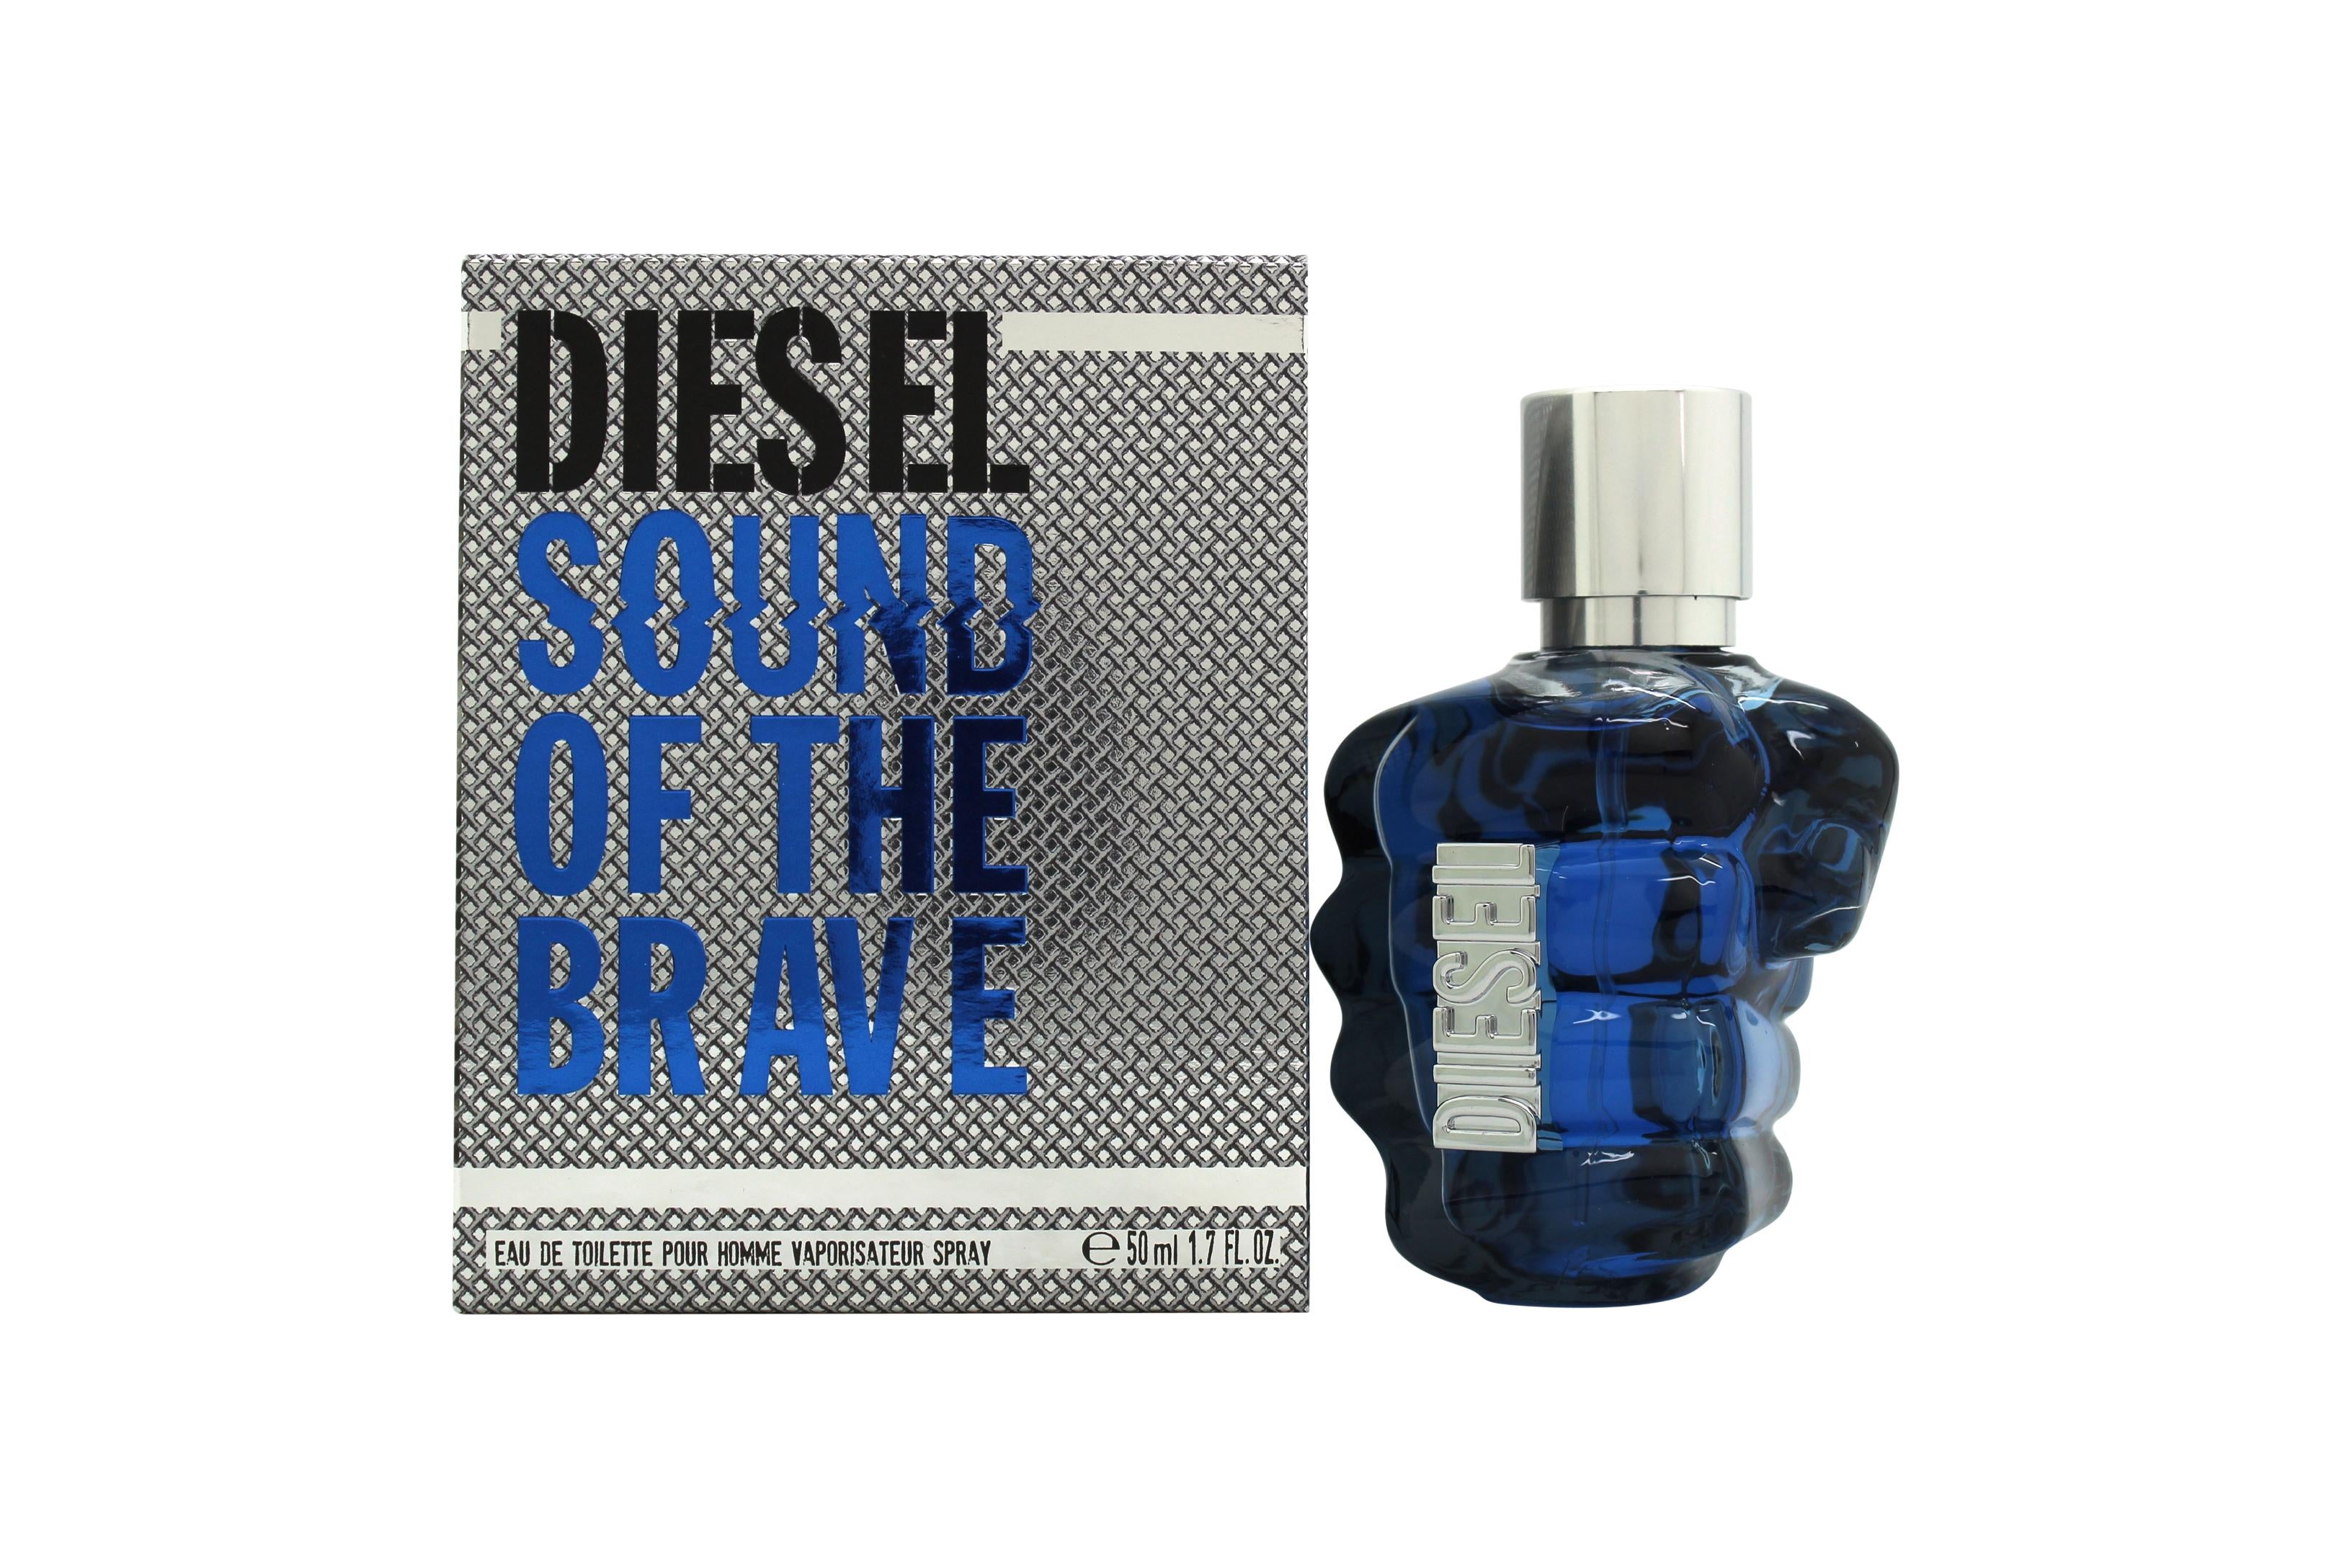 View Diesel Sound Of The Brave Eau de Toilette 50ml Spray information